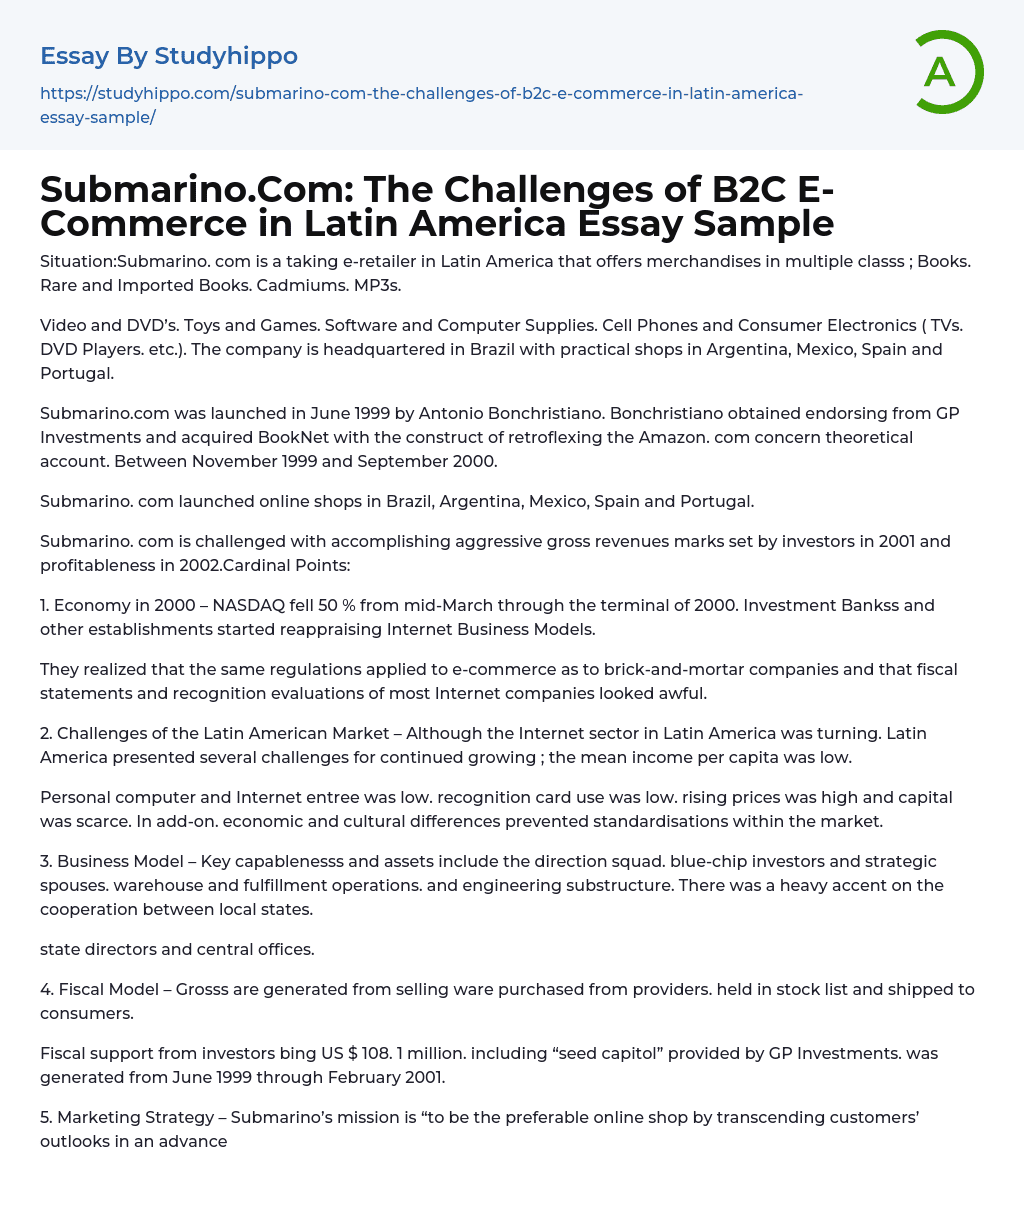 Submarino.Com: The Challenges of B2C E-Commerce in Latin America Essay Sample